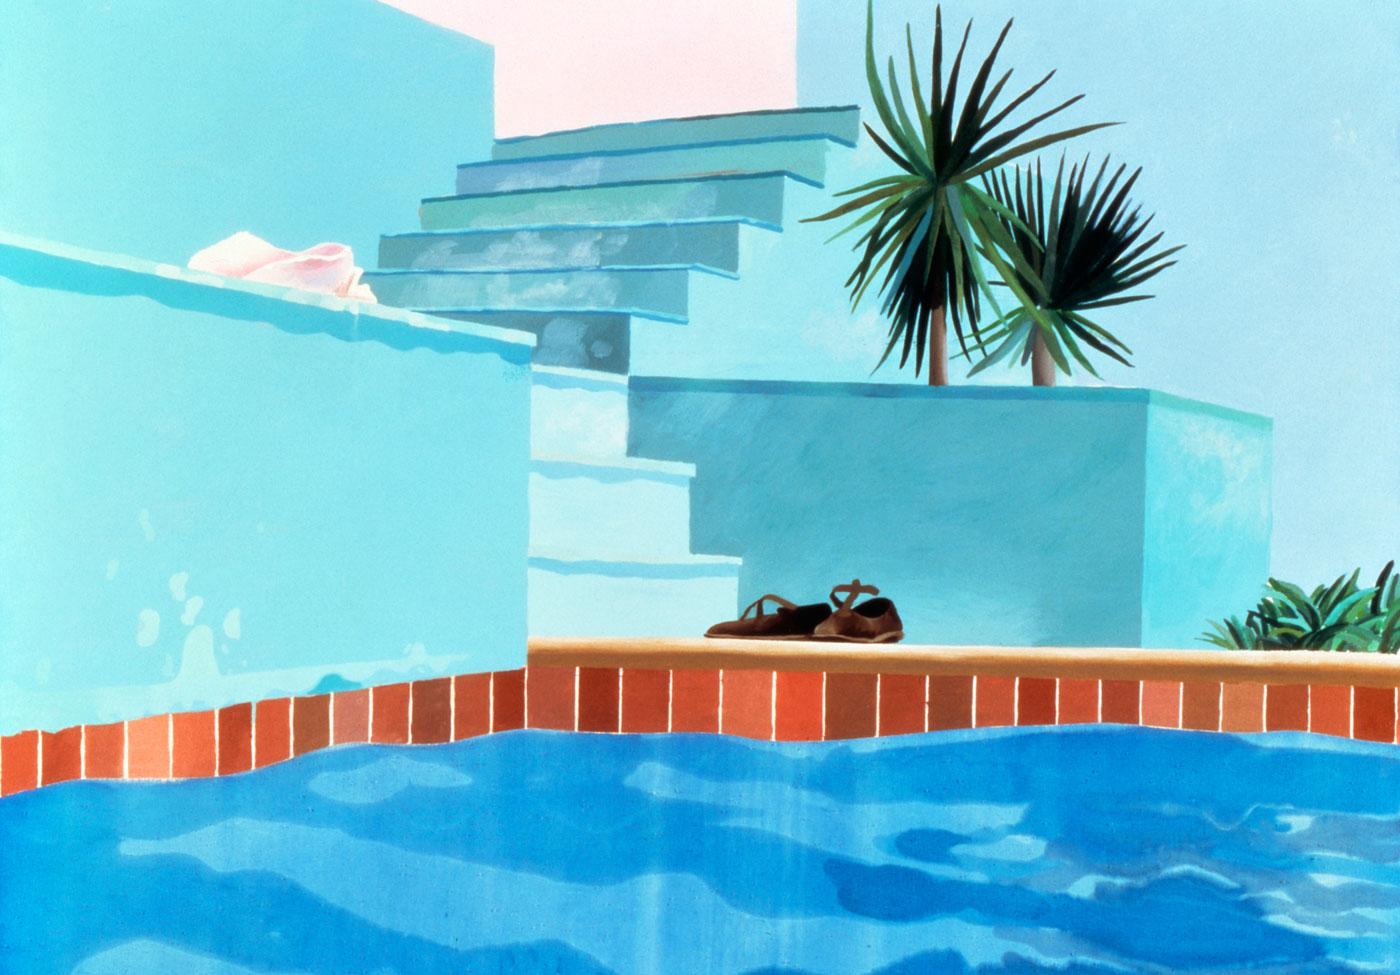 Pool and Steps, Le Nid du Duc by David Hockney, 1971. 